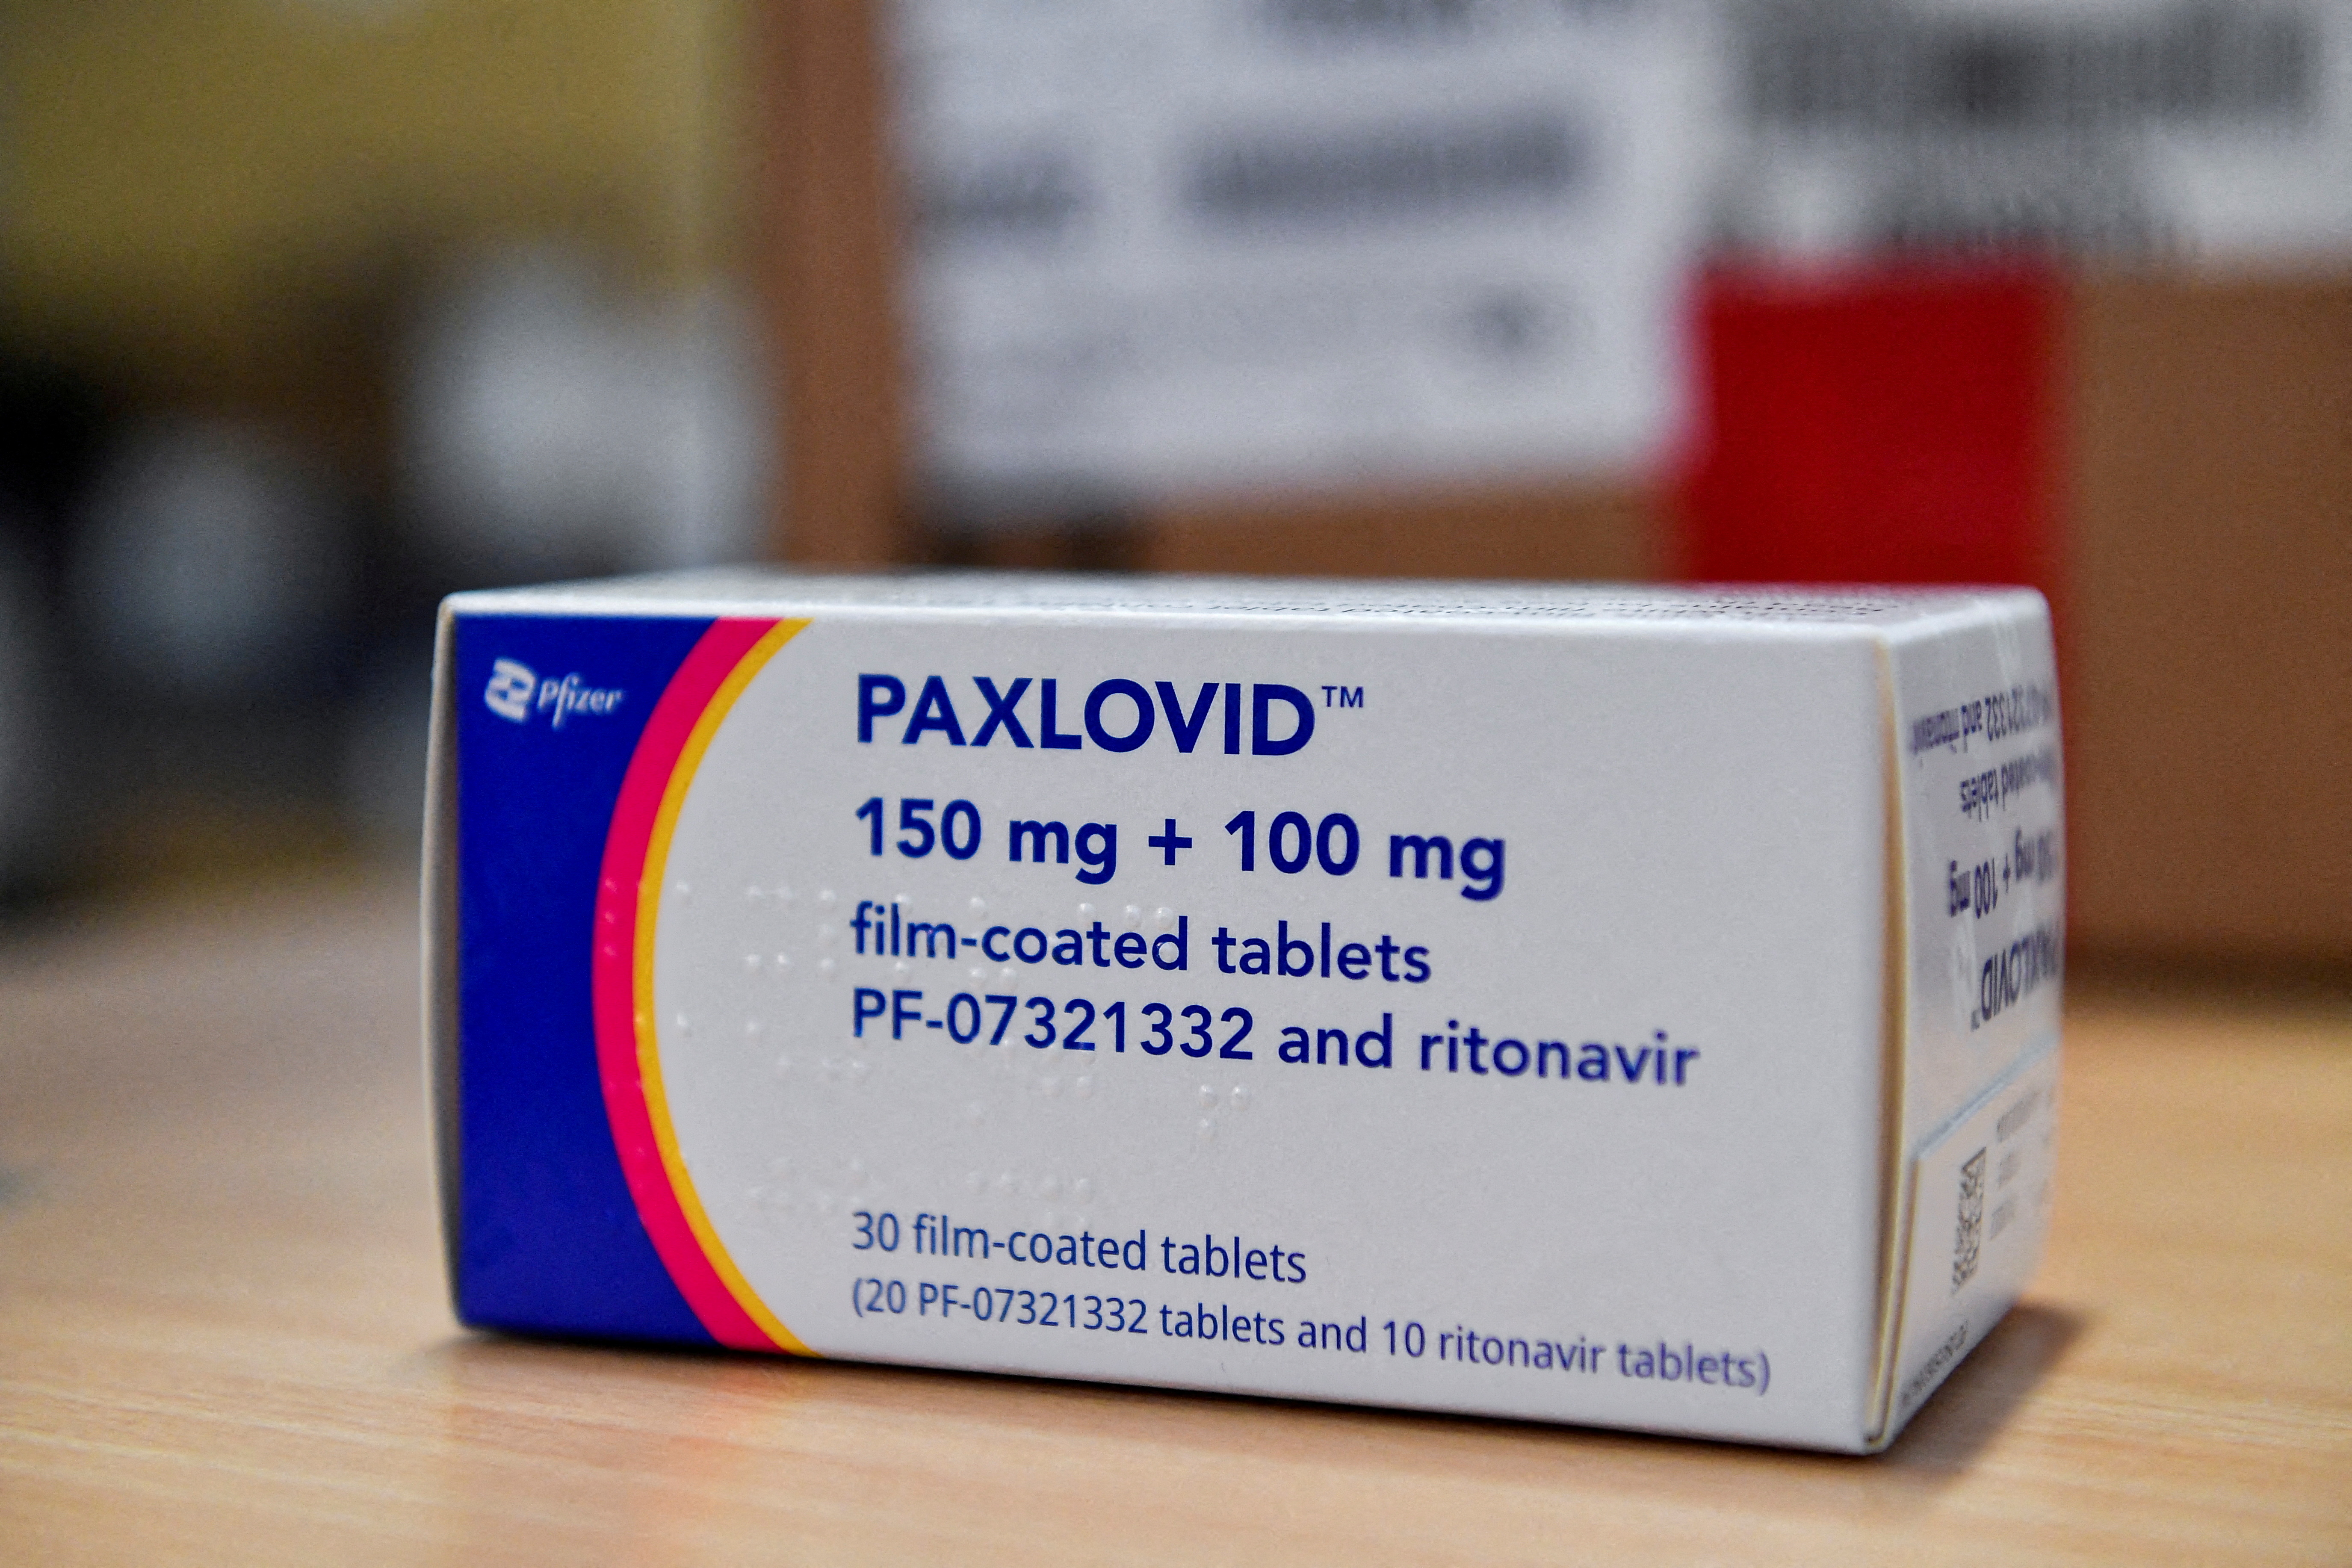 Pfizer COVID-19 pills arrive at Misericordia hospital, in Grosseto